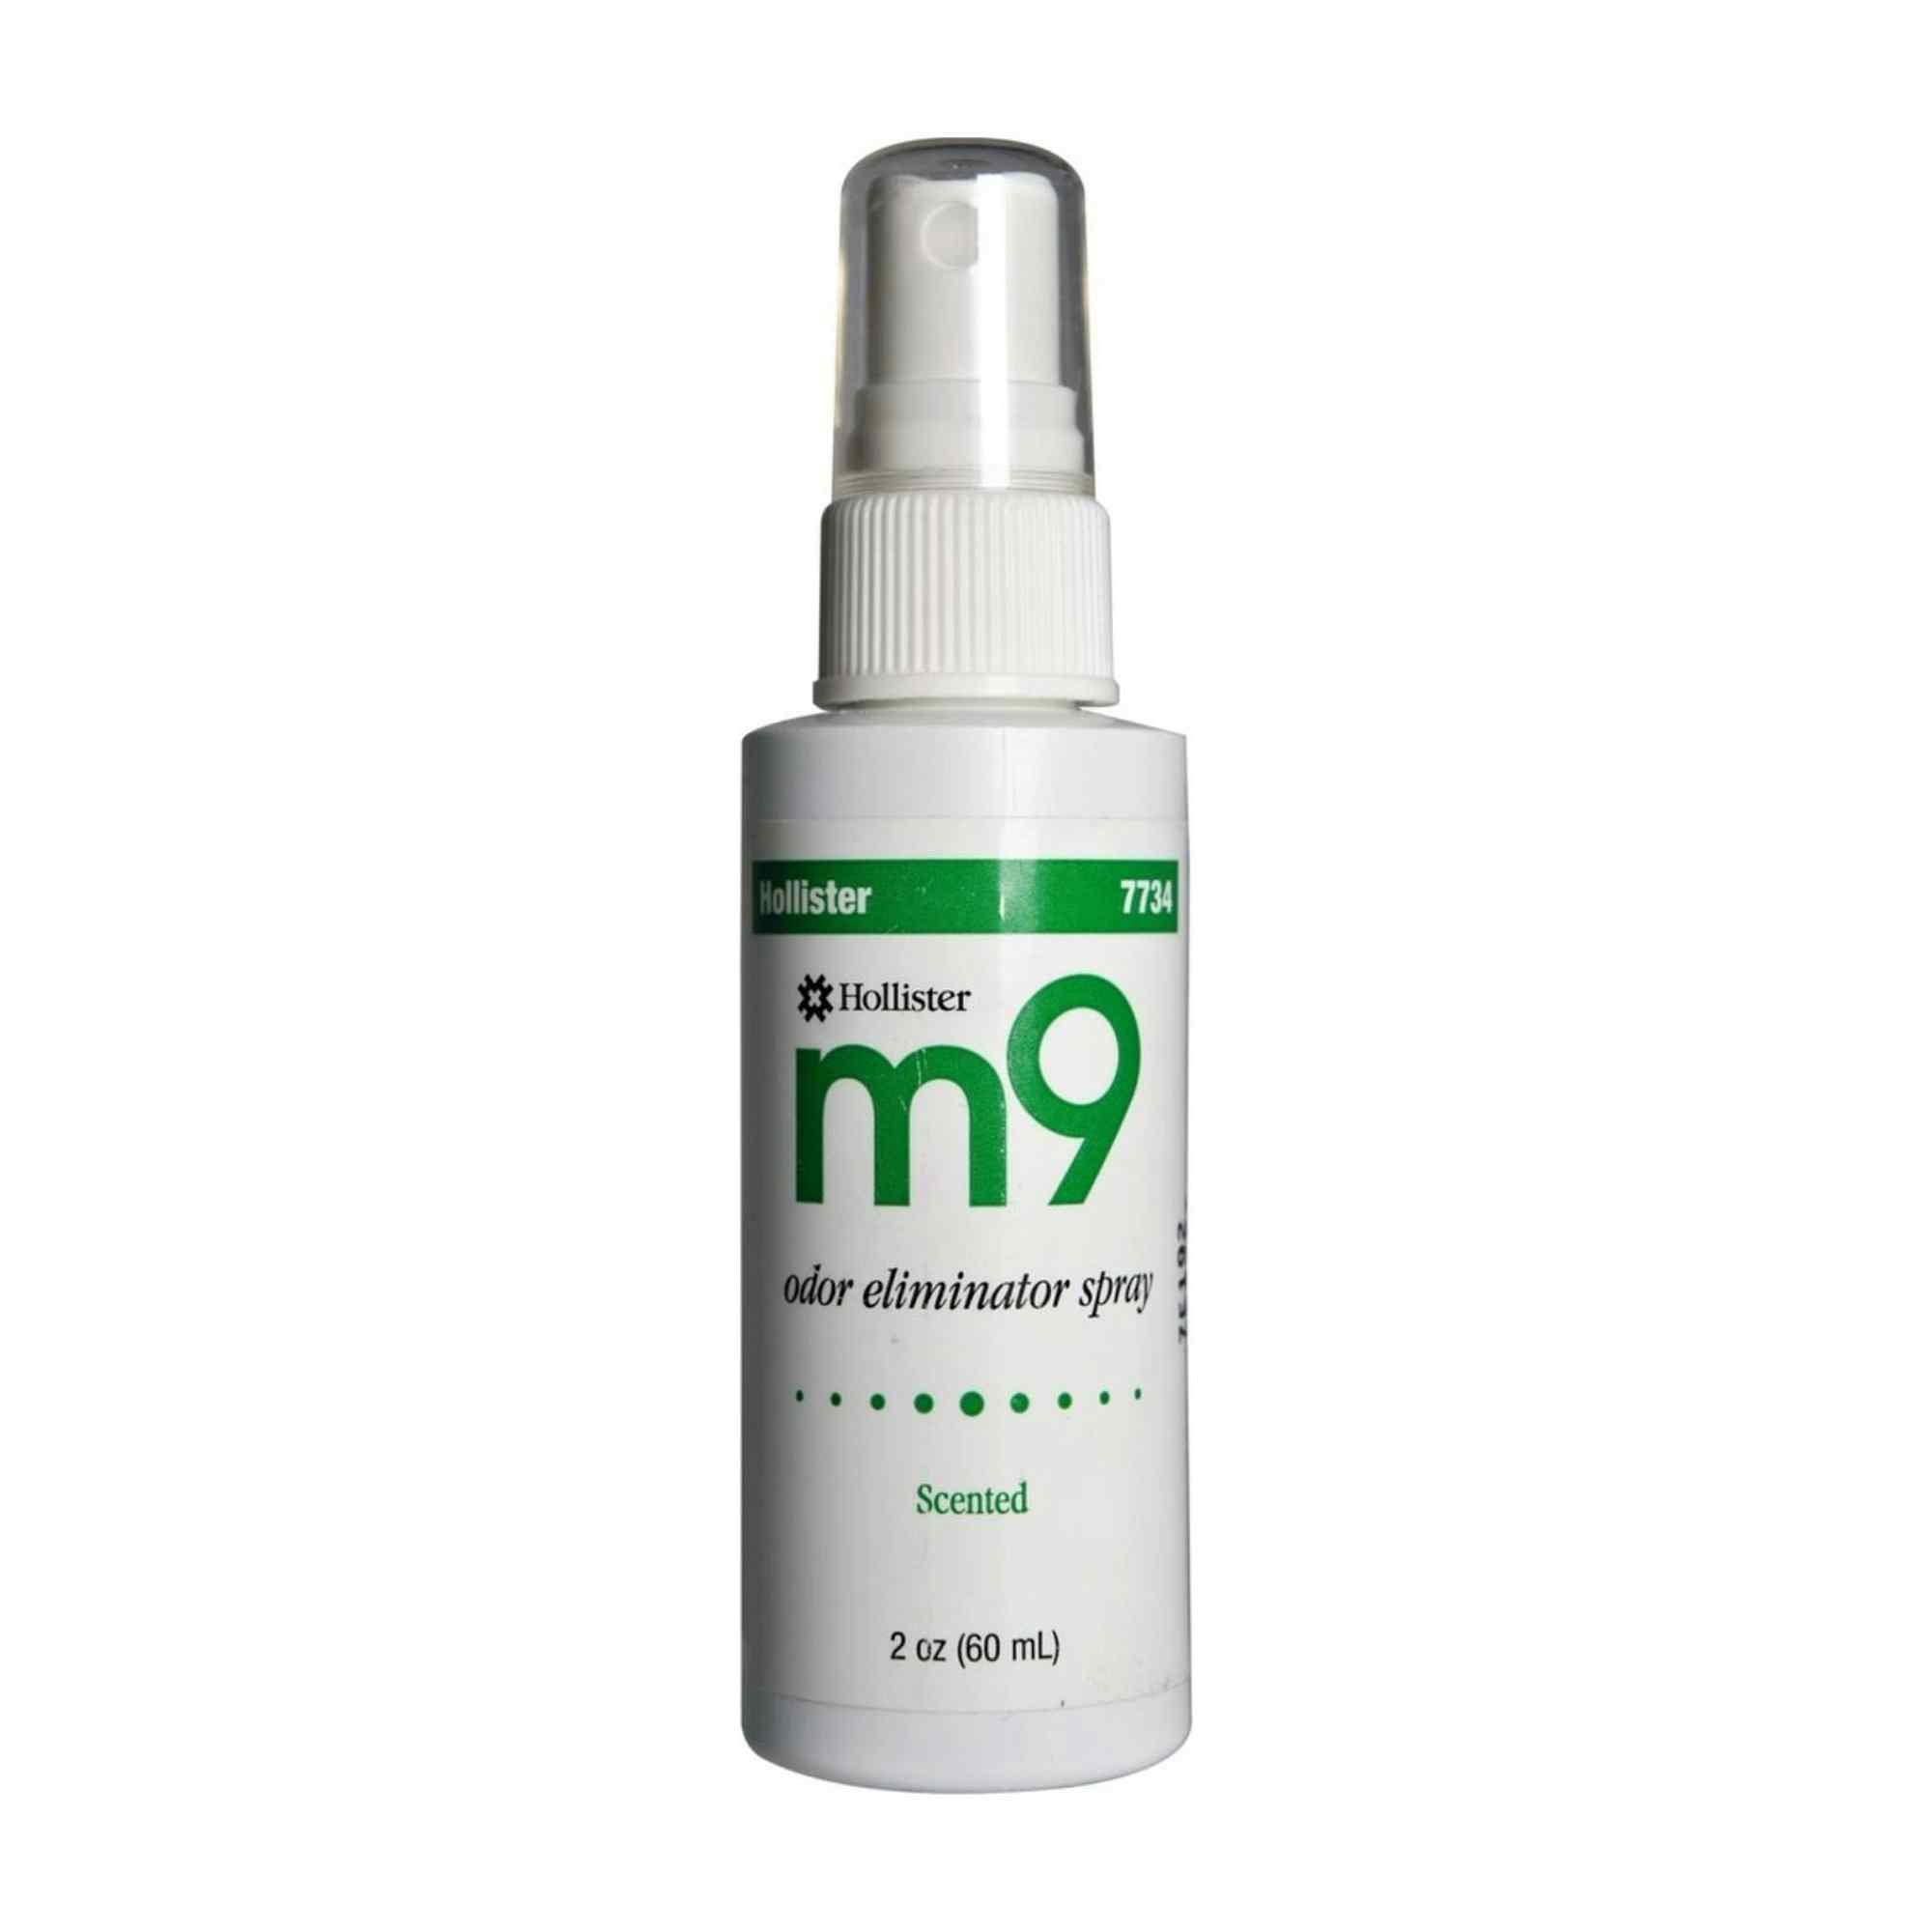 Hollister M9  Odor Eliminator Spray, Scented, 2 oz., 7734, Box of 12